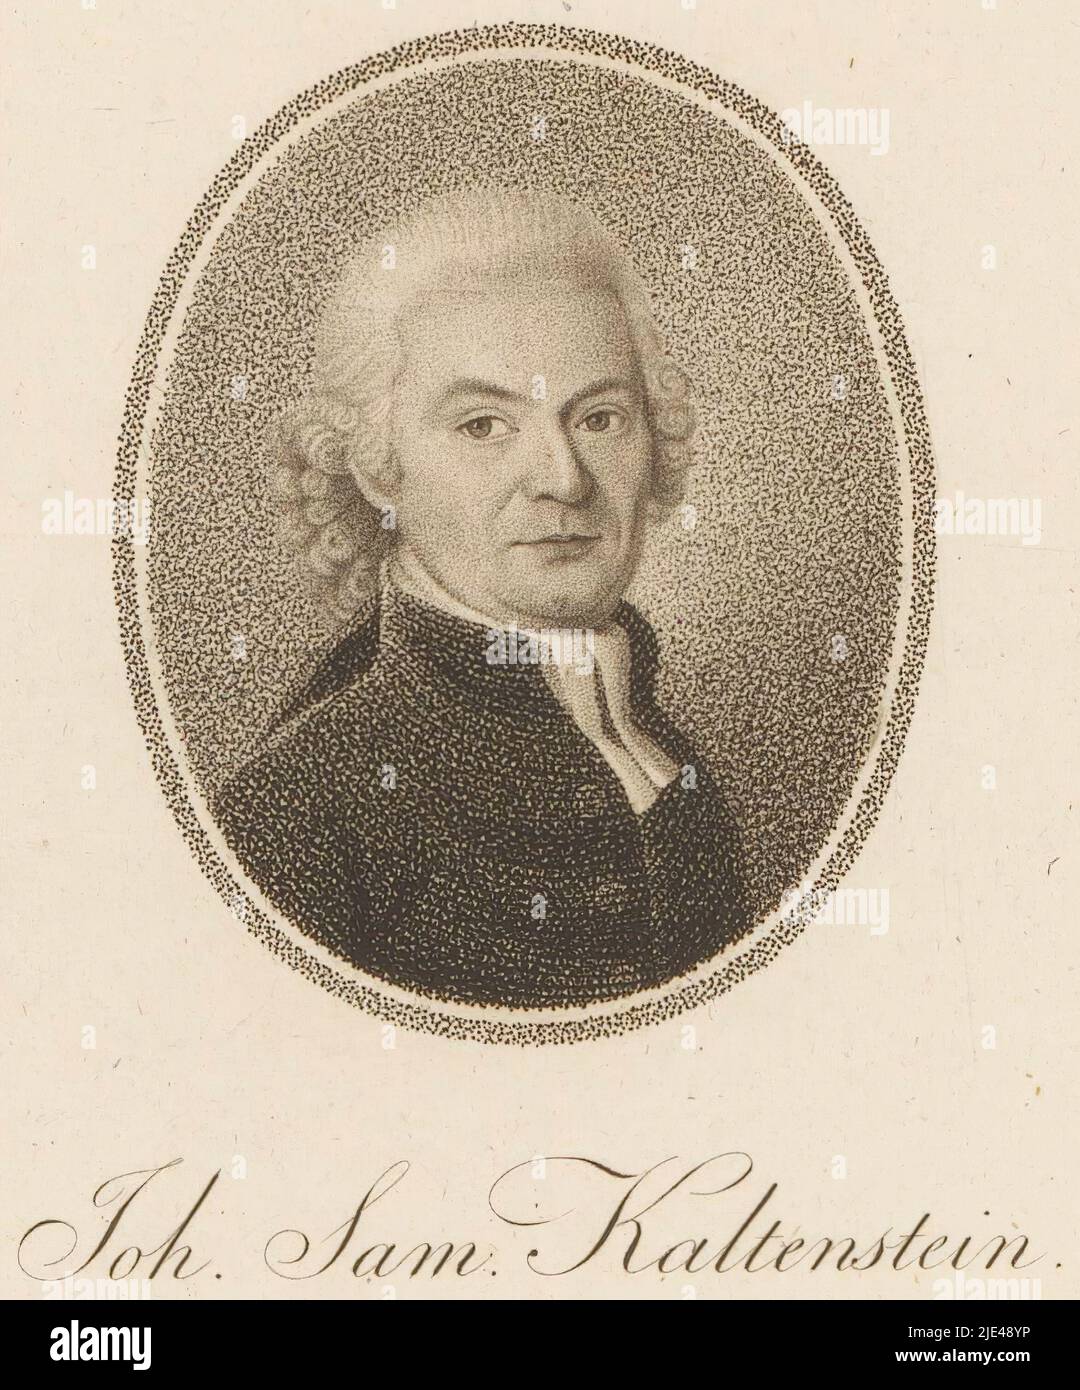 Portrait of Johann Samuel Kaltenstein, Johann Putz, 1750 - 1844, print maker: Johann Putz, 1750 - 1844, paper, engraving, h 145 mm - w 101 mm Stock Photo